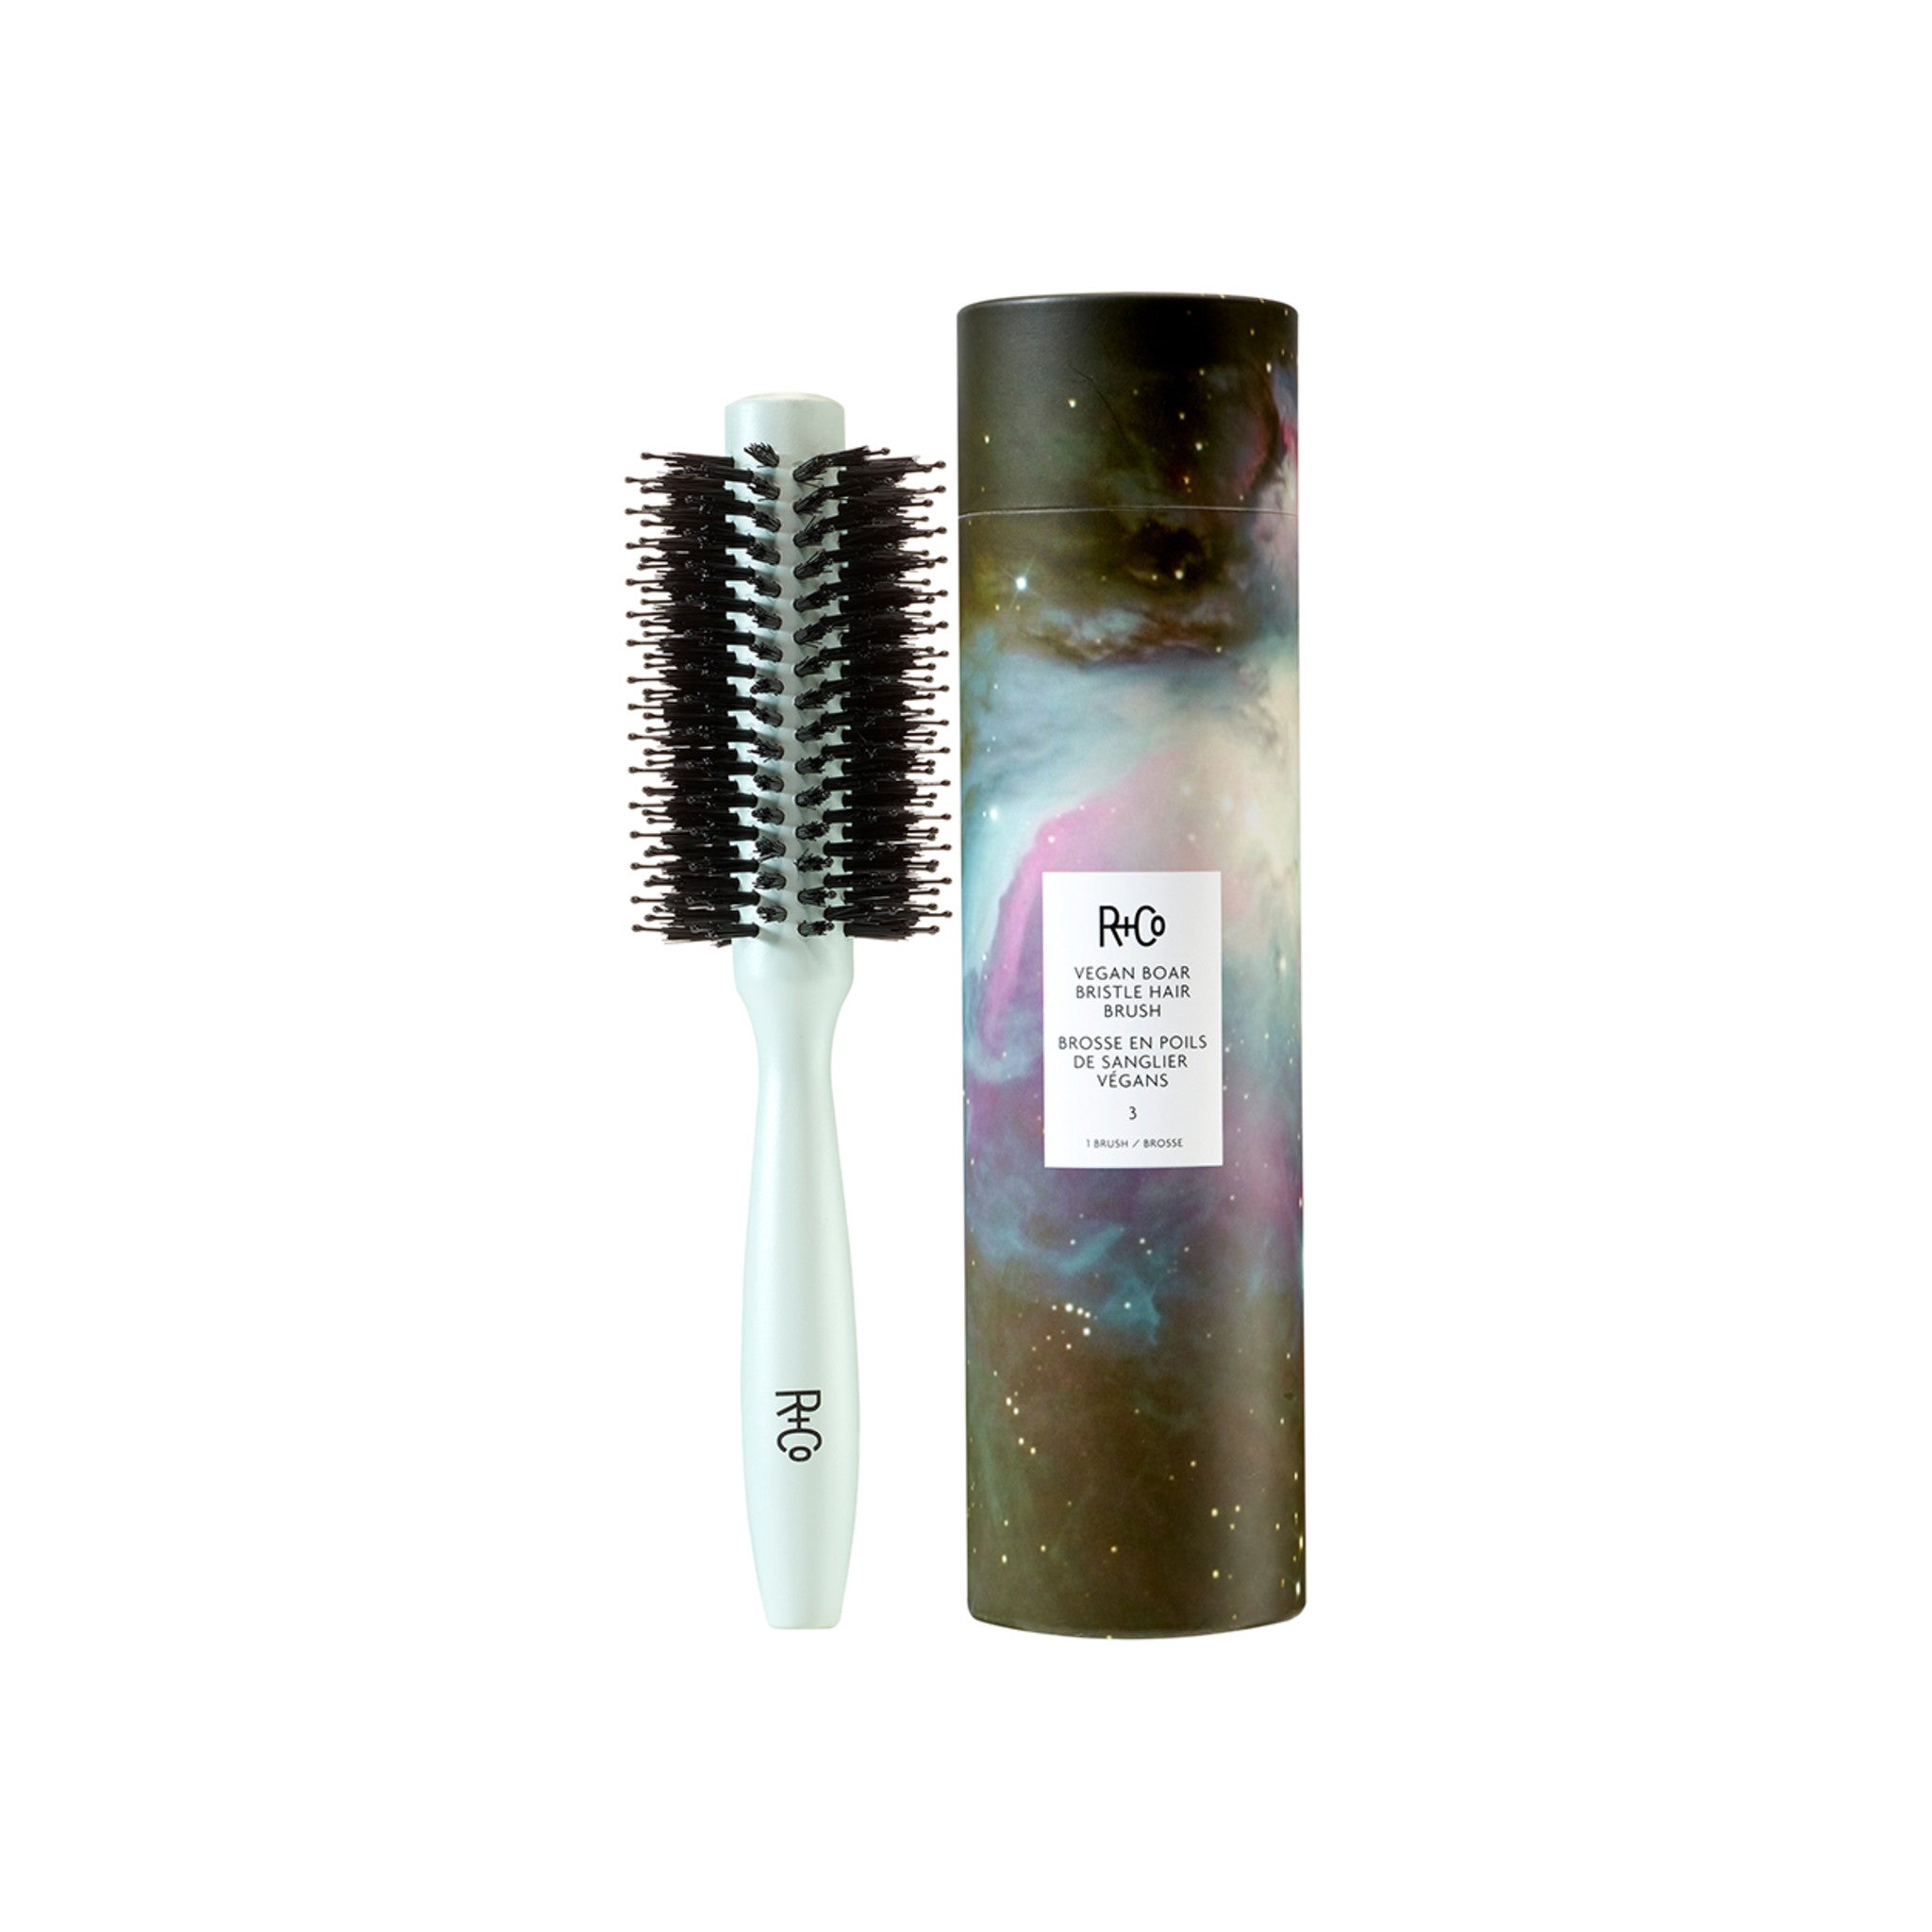 R+Co Round Hair Brush Size variant: 58mm main image.